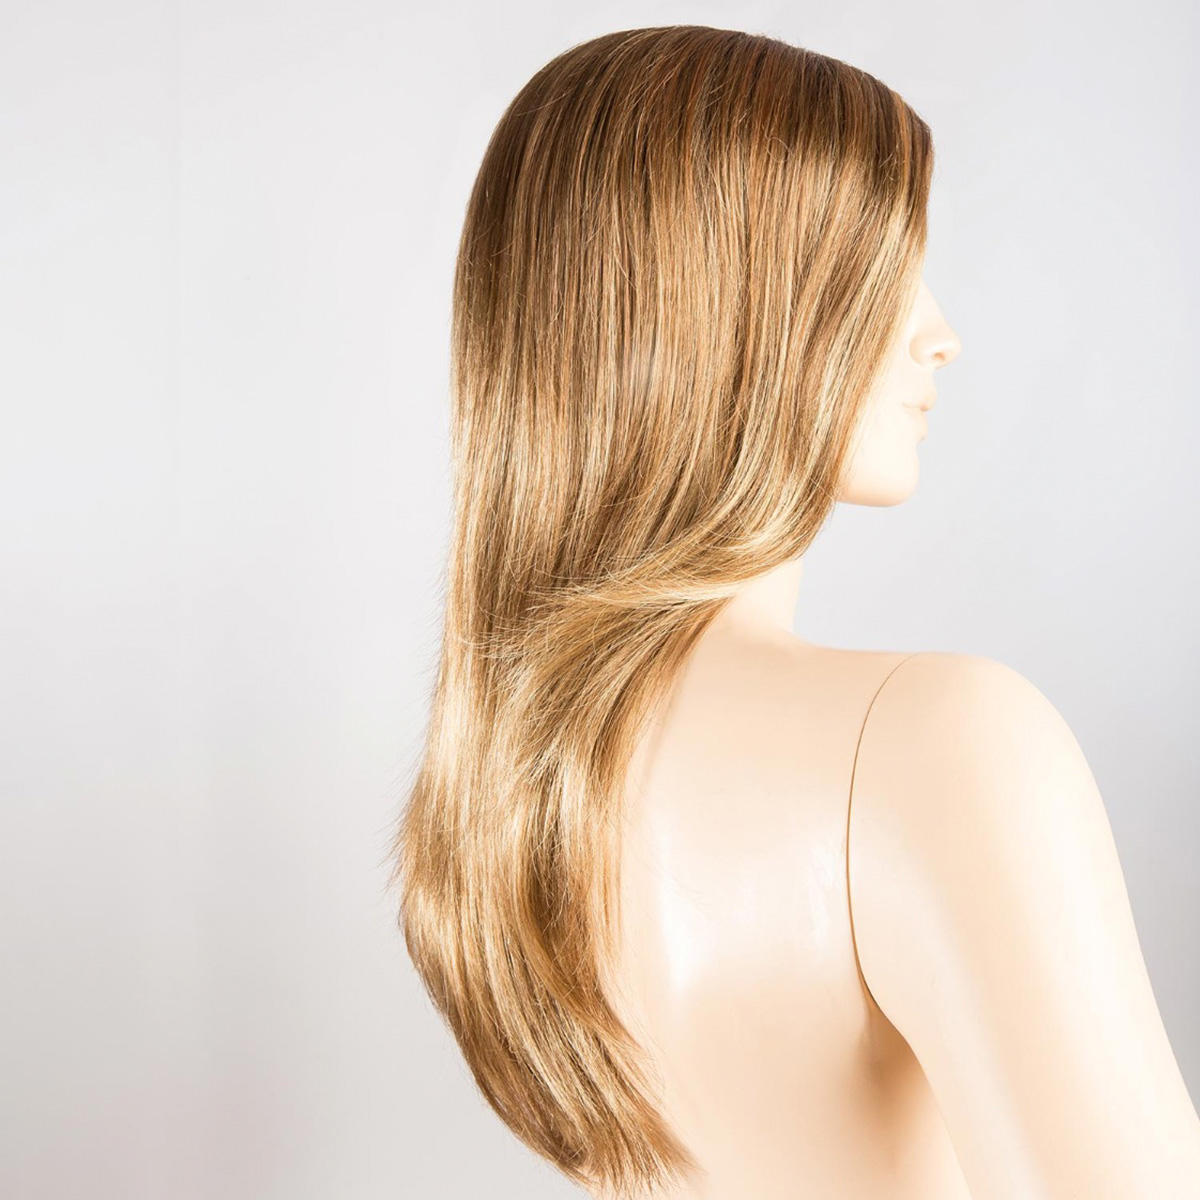 Ellen Wille HairPower parrucca di capelli sintetici Glamour Mono ambra chiara radicata ambra chiara radicata